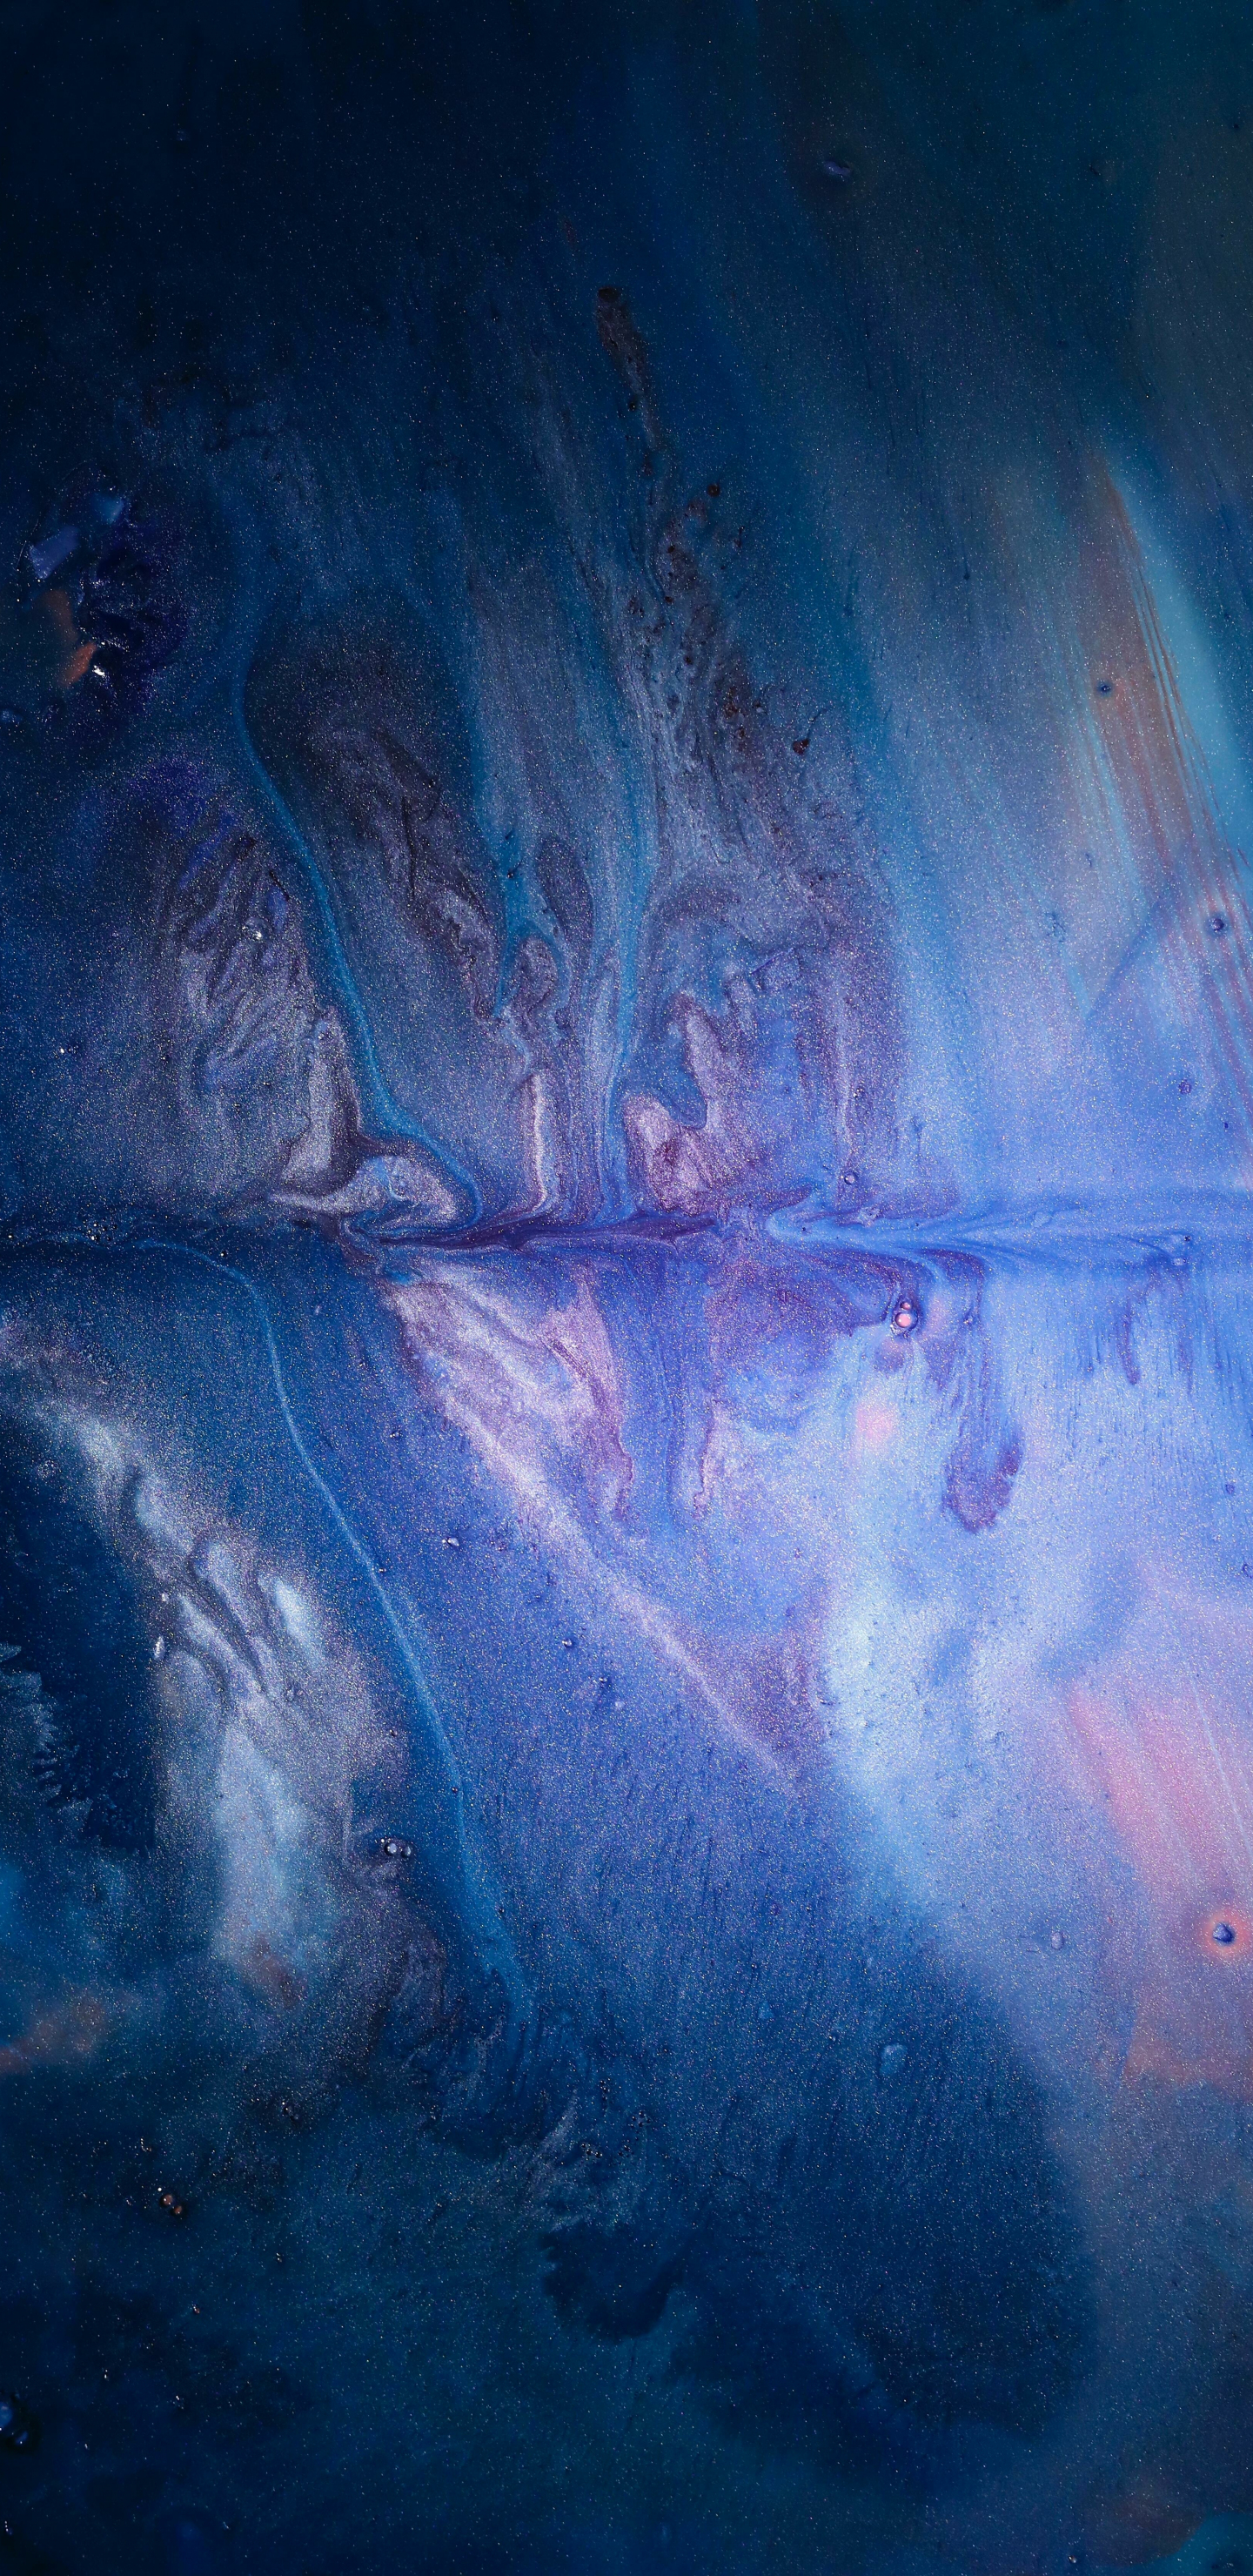 Download wallpaper 1440x2960 surface colorful artwork bluish theme  samsung galaxy s8 samsung galaxy s8 plus 1440x2960 hd background 28320